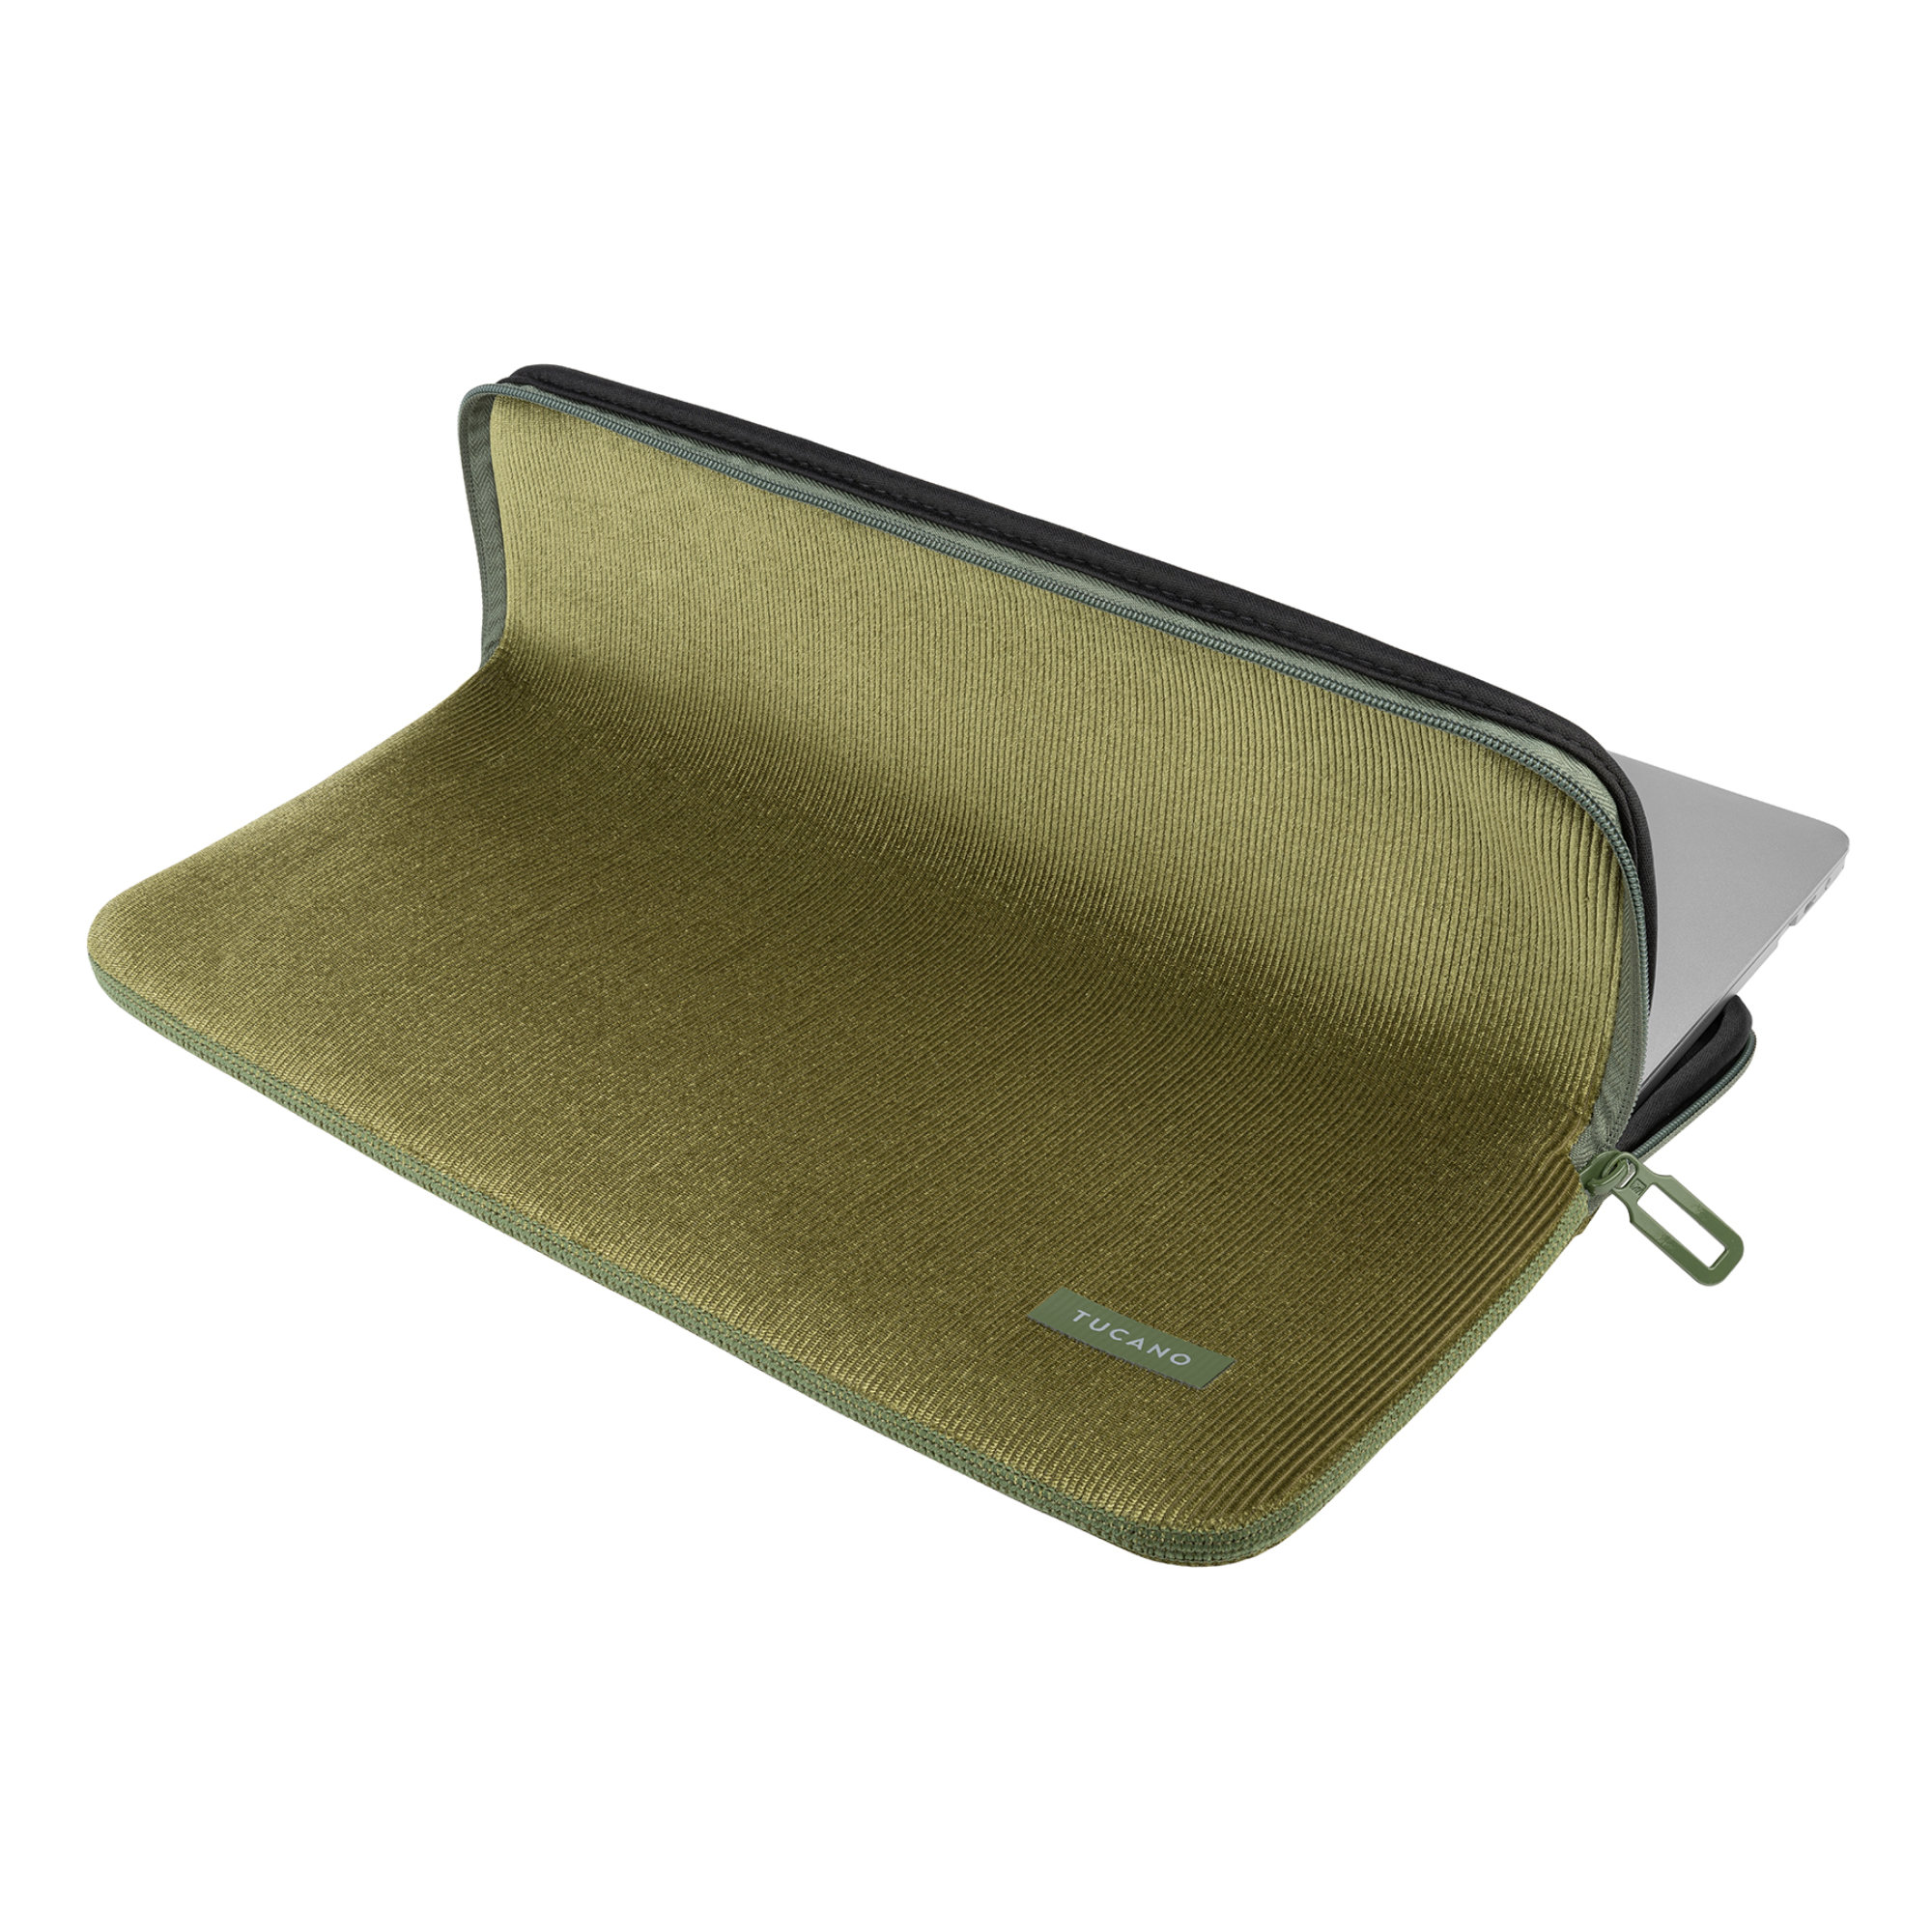 TUCANO BFVELMB16-V SLEEVE 15,6 GRUEN Notebooktasche Grün für Sleeve Neopren, Cord, Apple